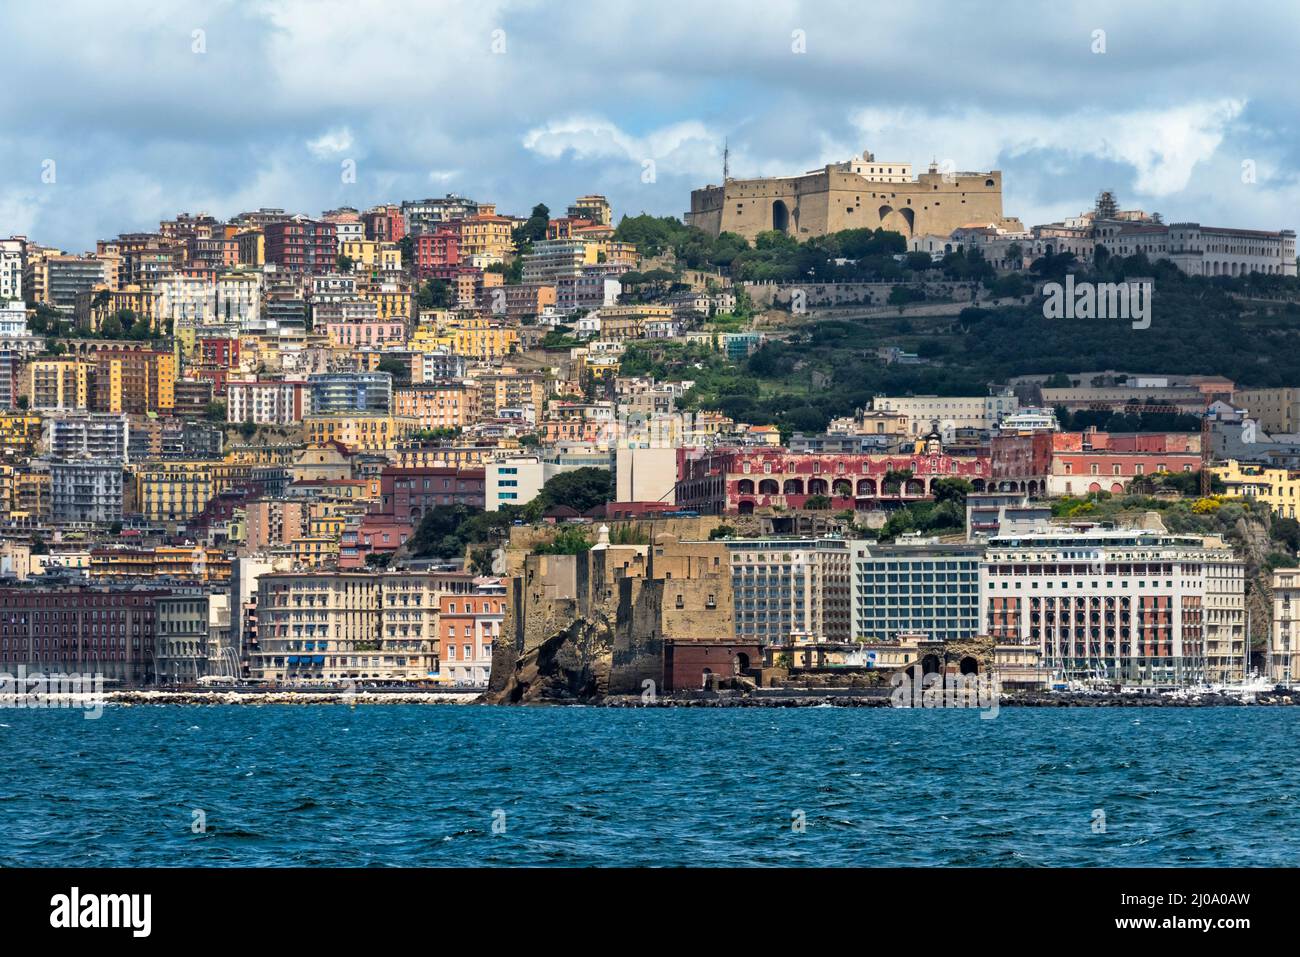 Castel sant'Elmo on a hilltop overlooking the harbor, Naples, Campania Region, Italy Stock Photo